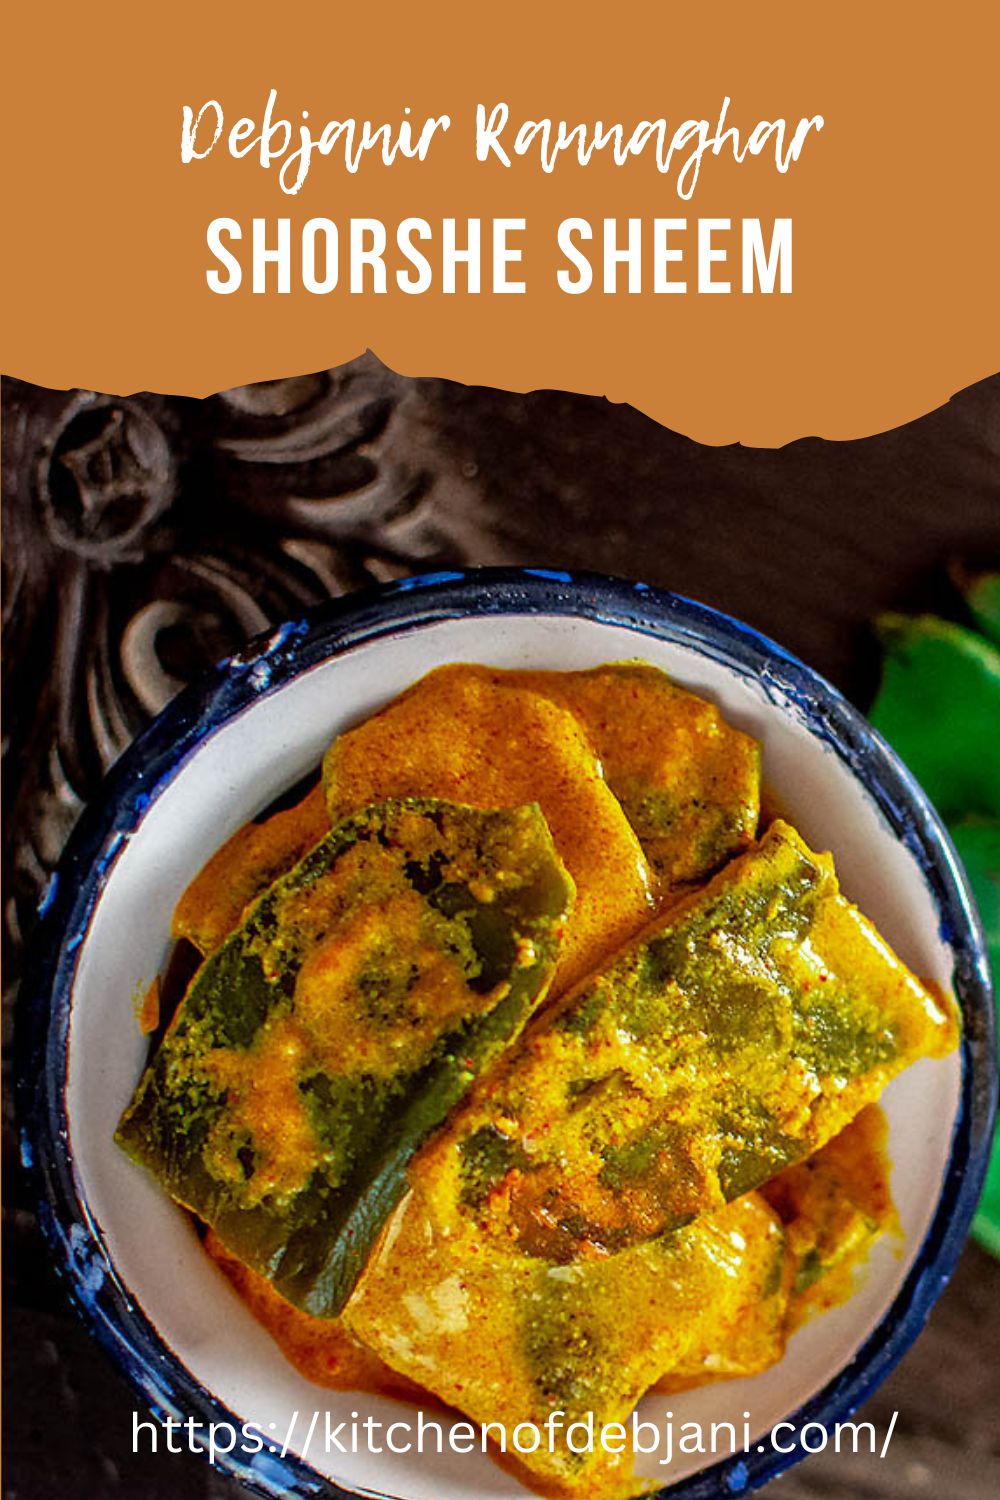 %Bengali Shorshe Sheem Recipe Pinterest Graphic